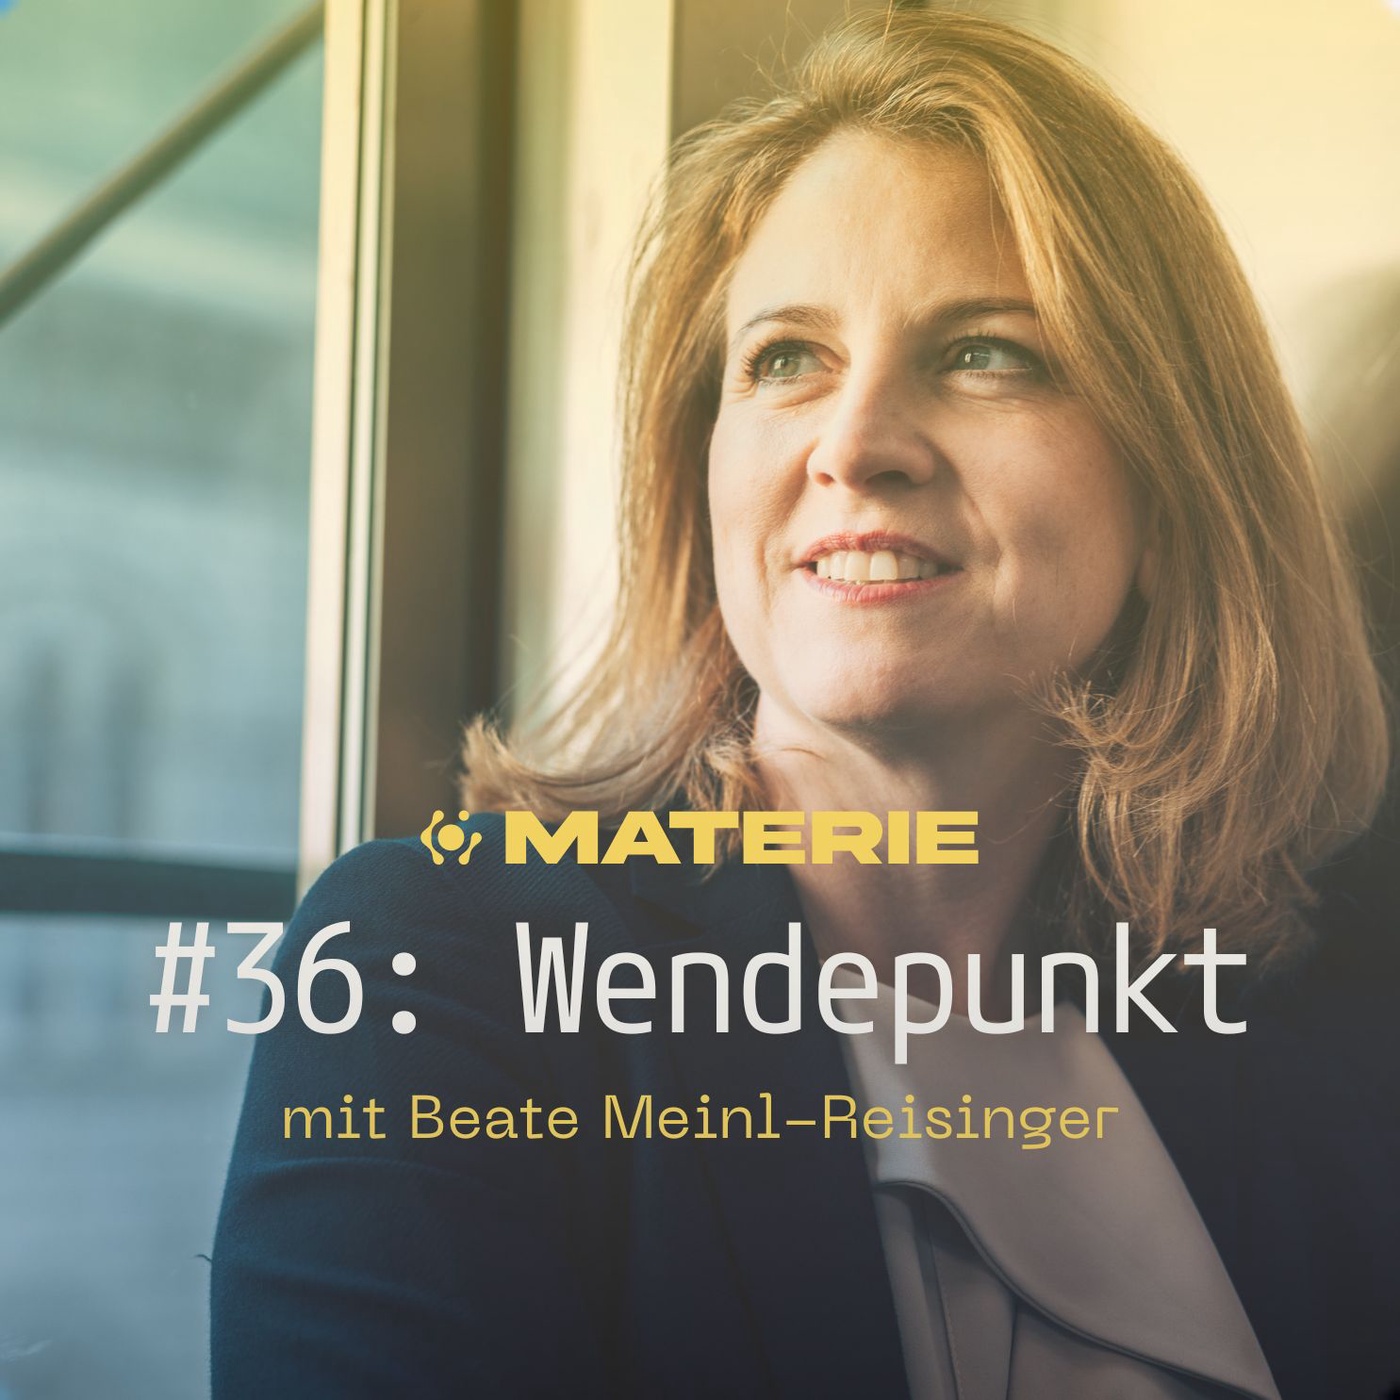 Wendepunkt - Beate Meinl-Reisinger